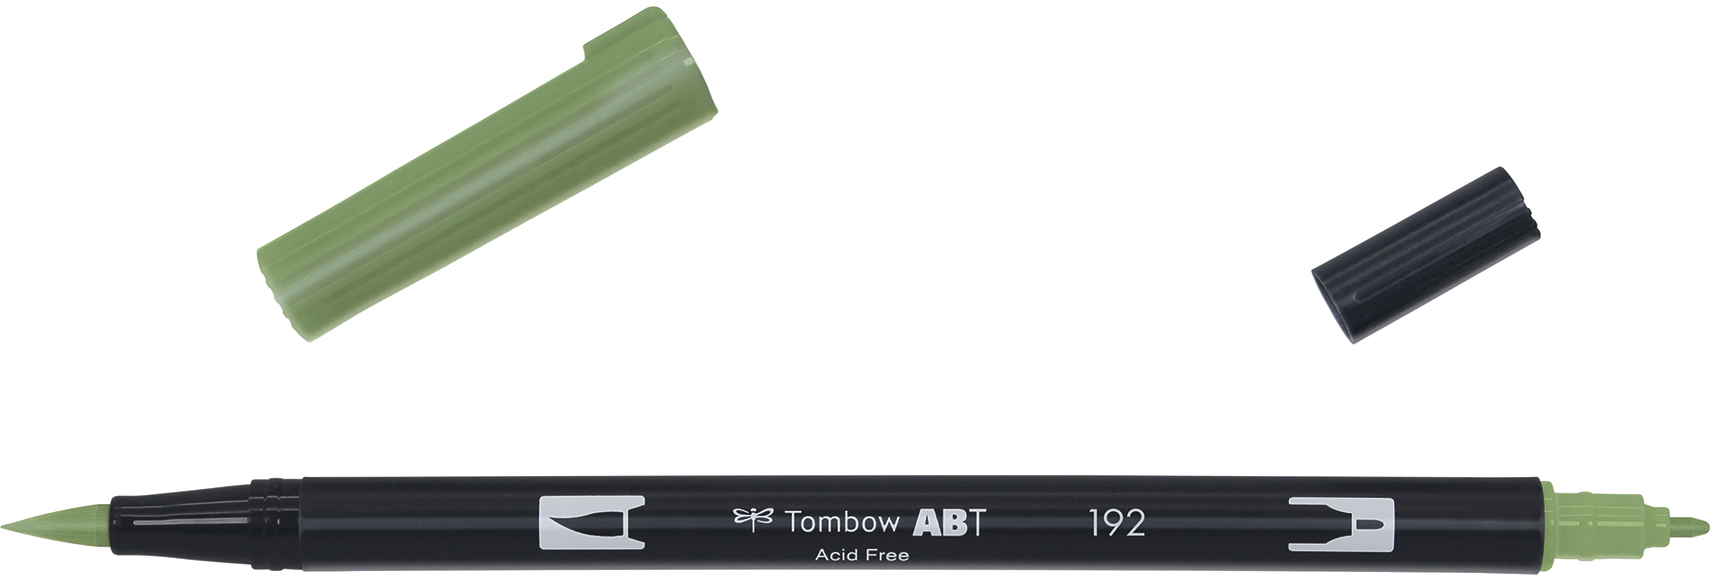 TOMBOW Dual Brush Pen ABT 192 aspargus aspargus